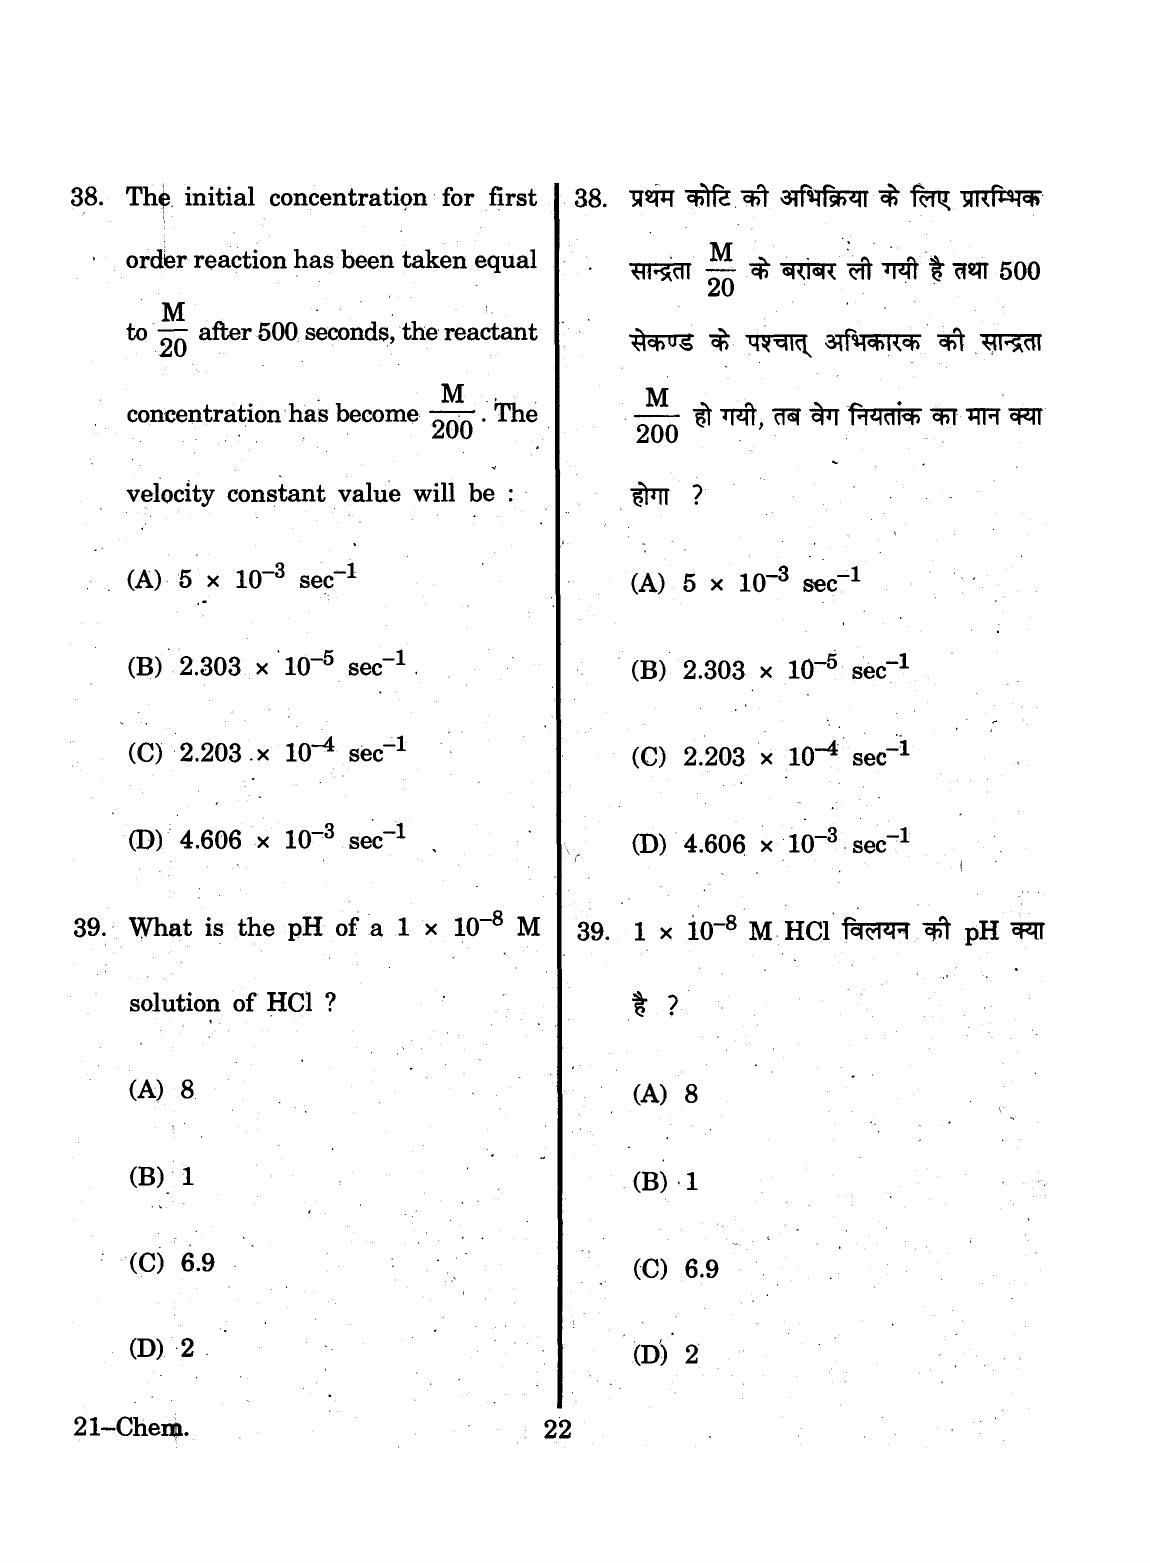 URATPG 2015 Chemisty Question Paper - Page 22